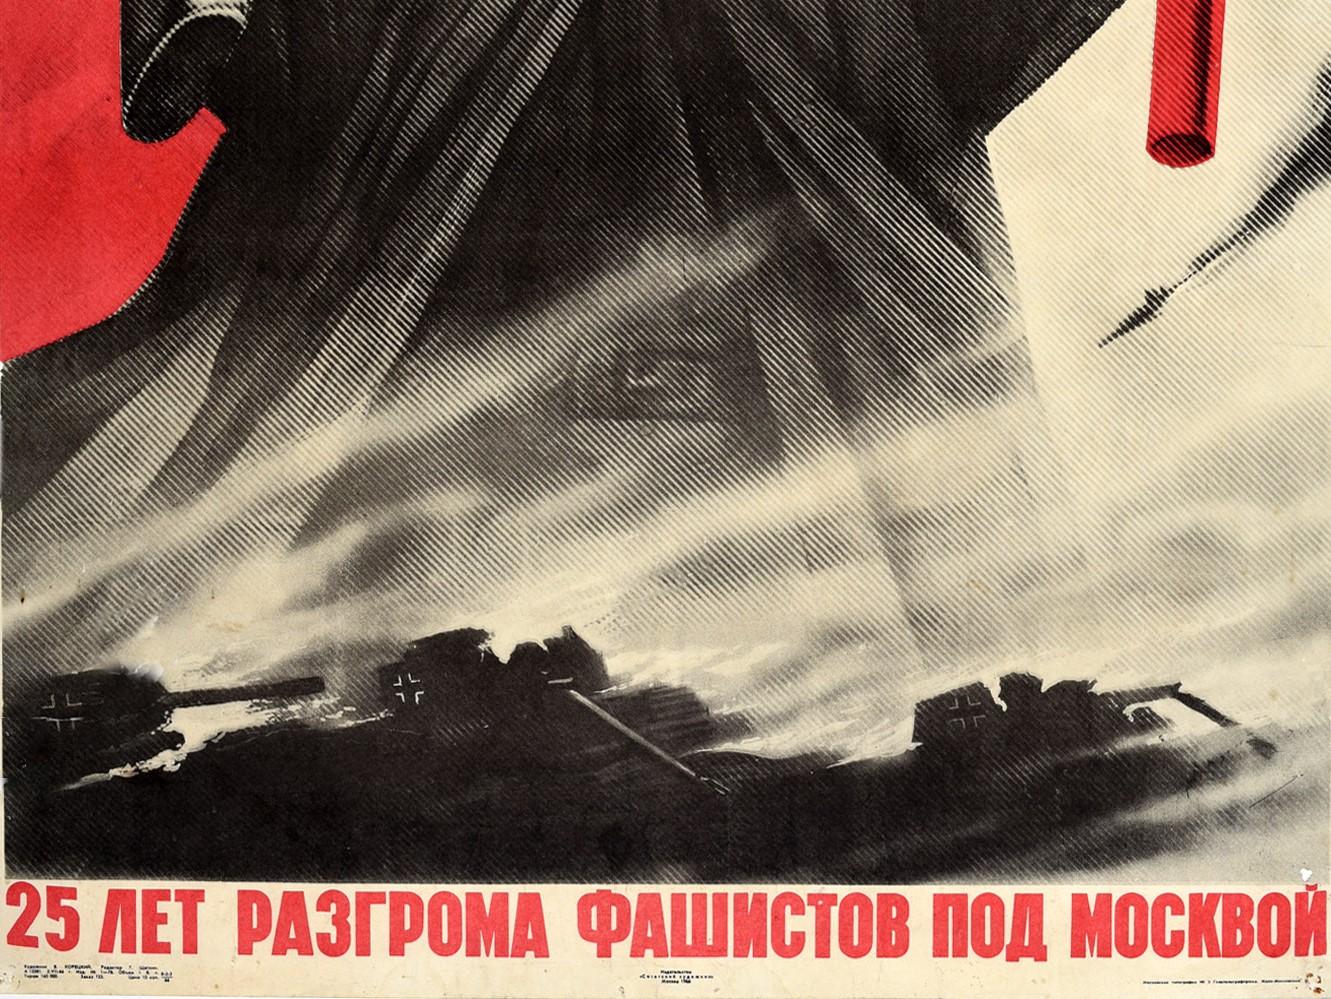 soviet propaganda posters